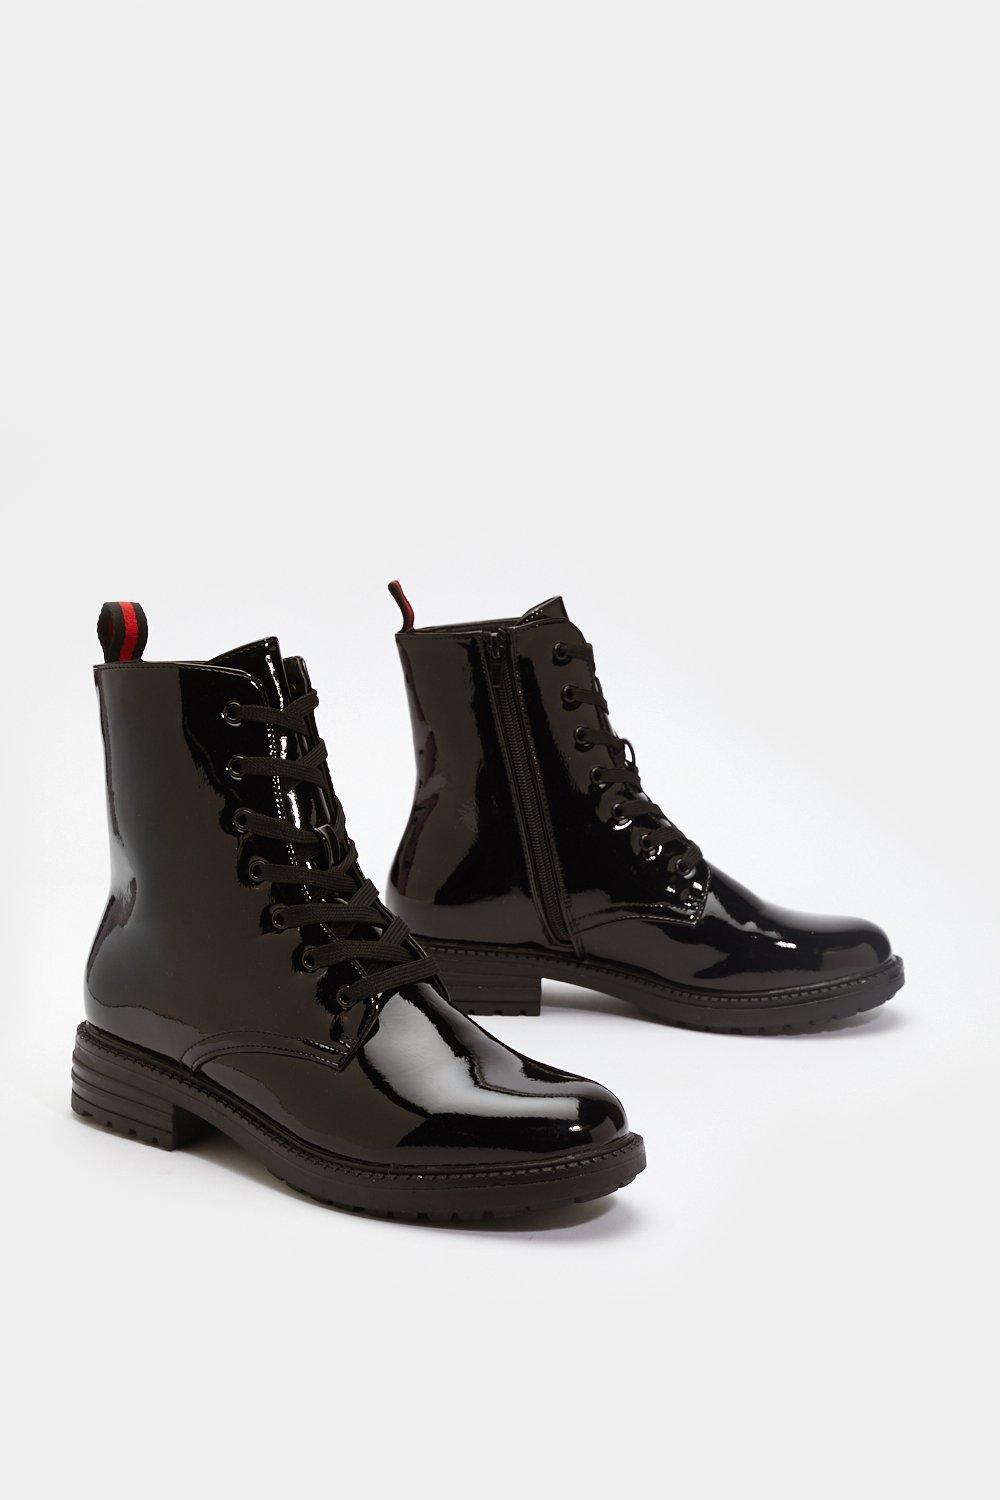 isabel marant style boots